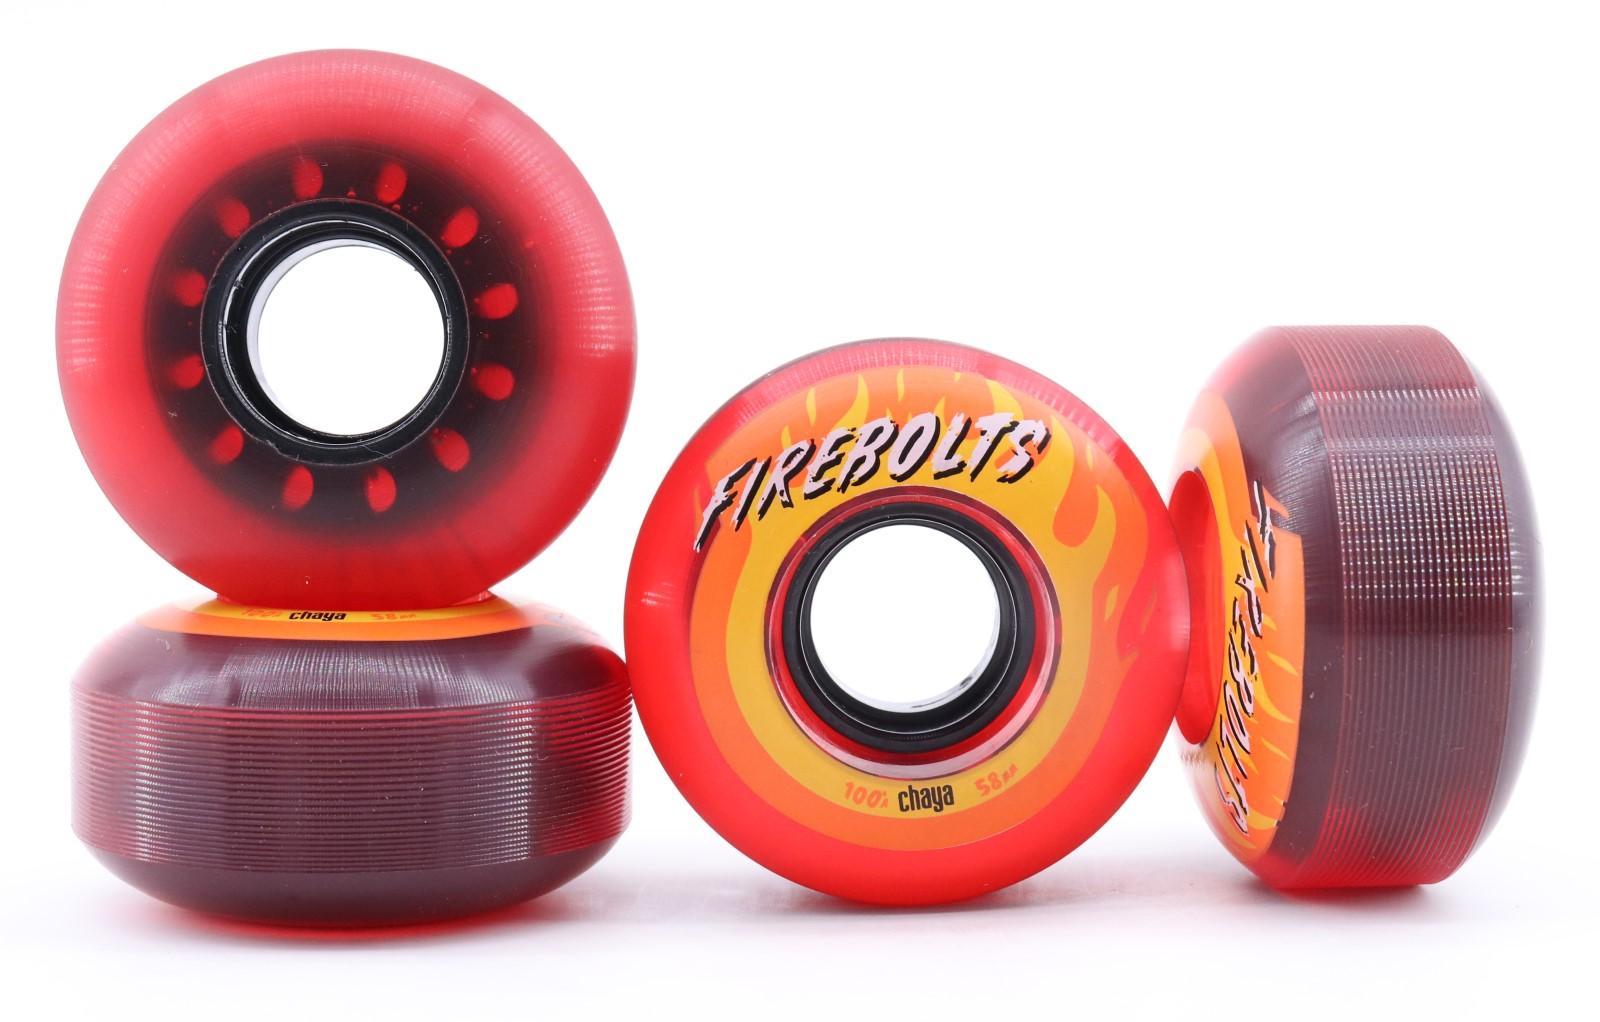 Chaya Firebolts Roller Skates - Wheels Red Translucent